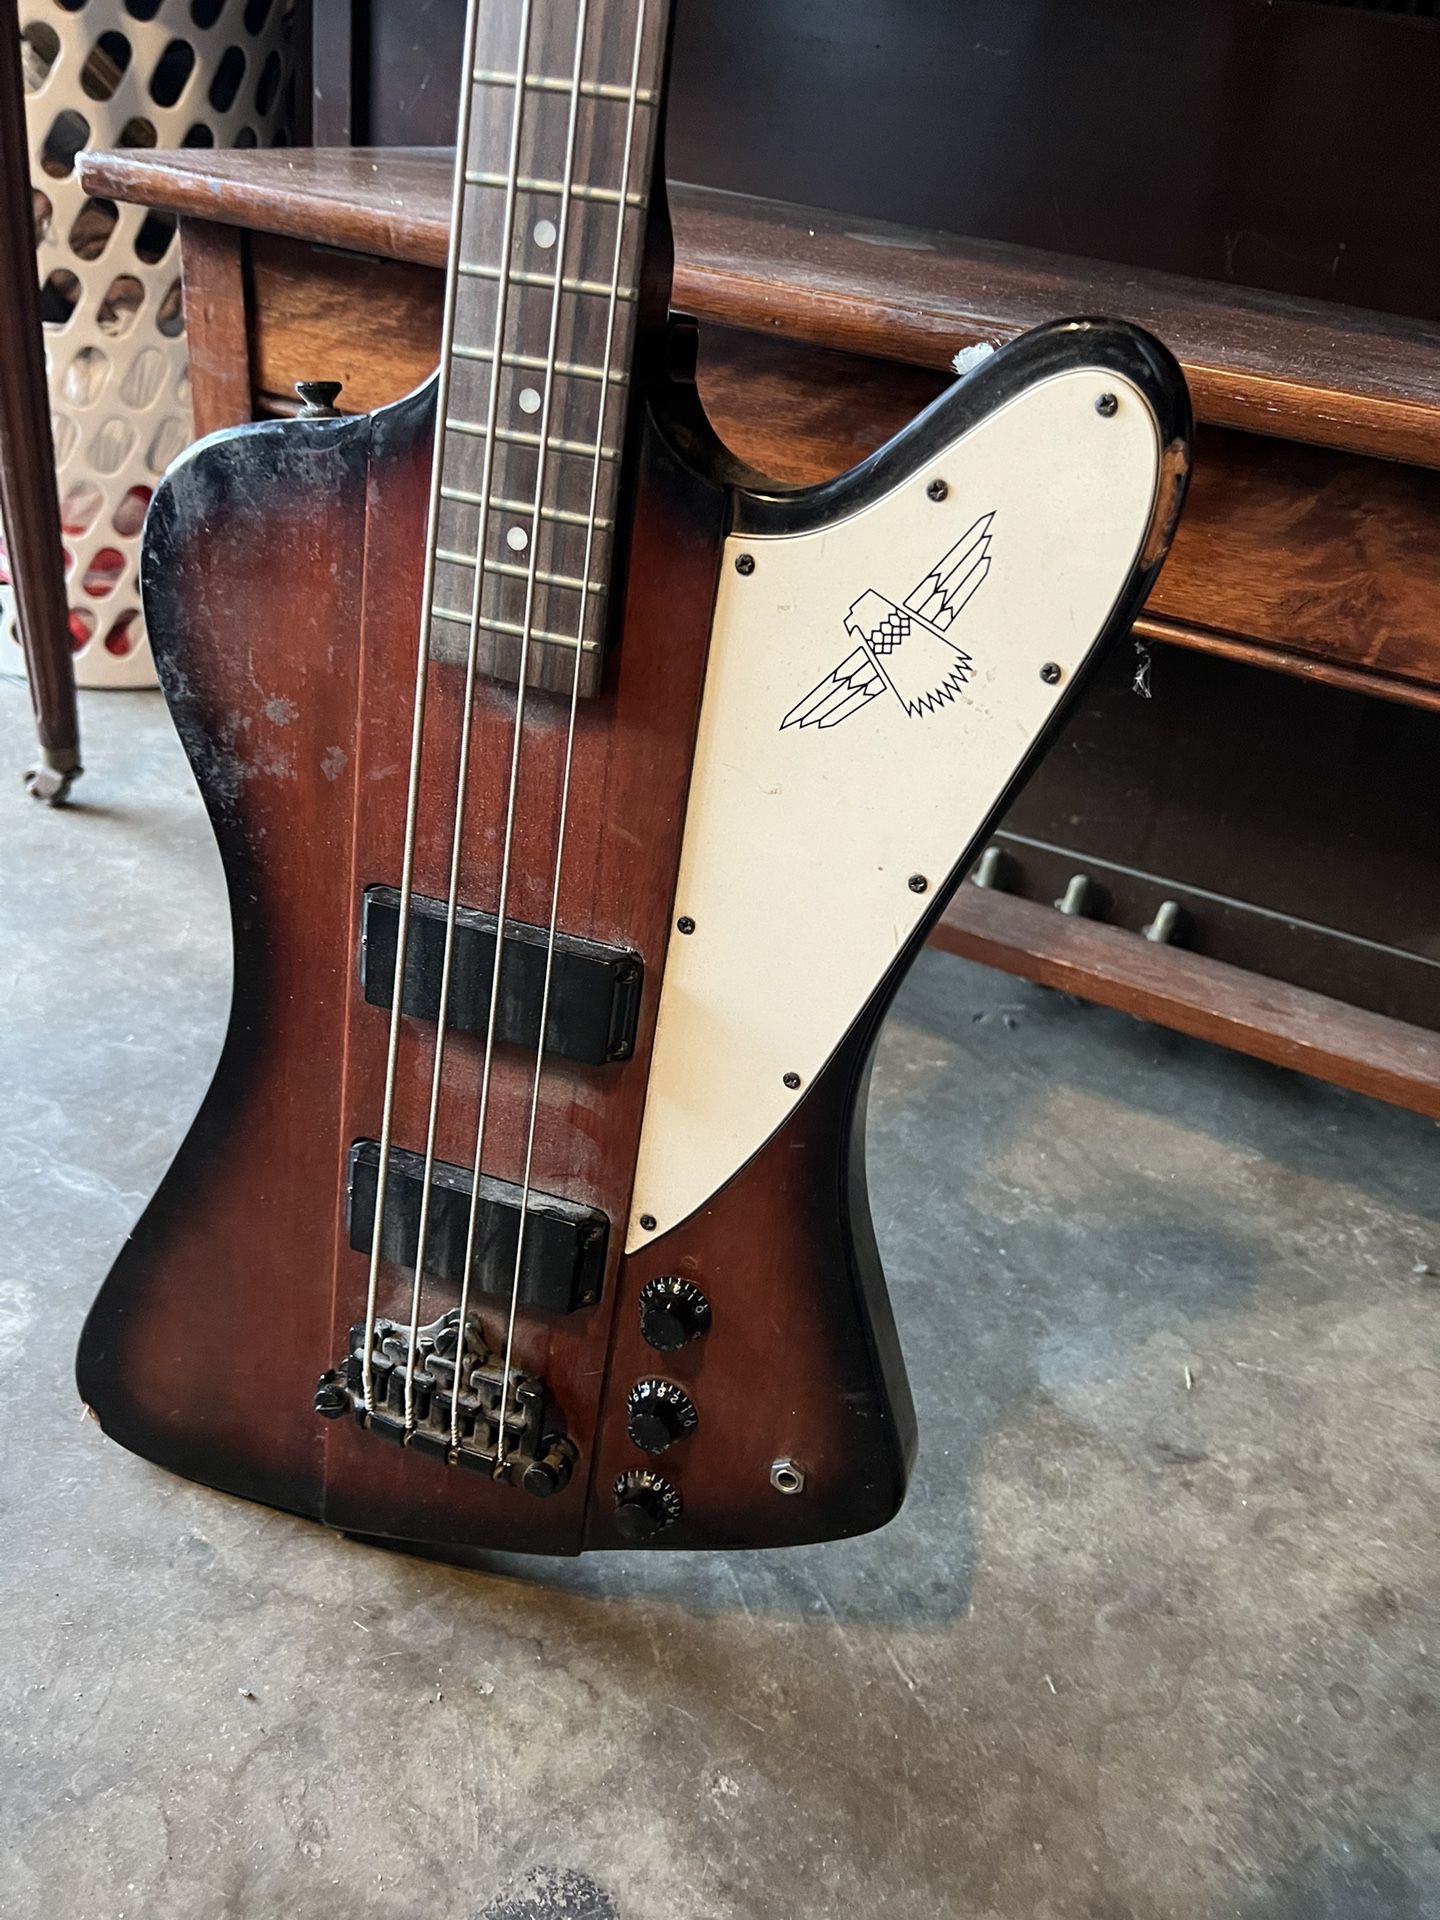 Epiphone Thunderbird E1 Bass Guitar